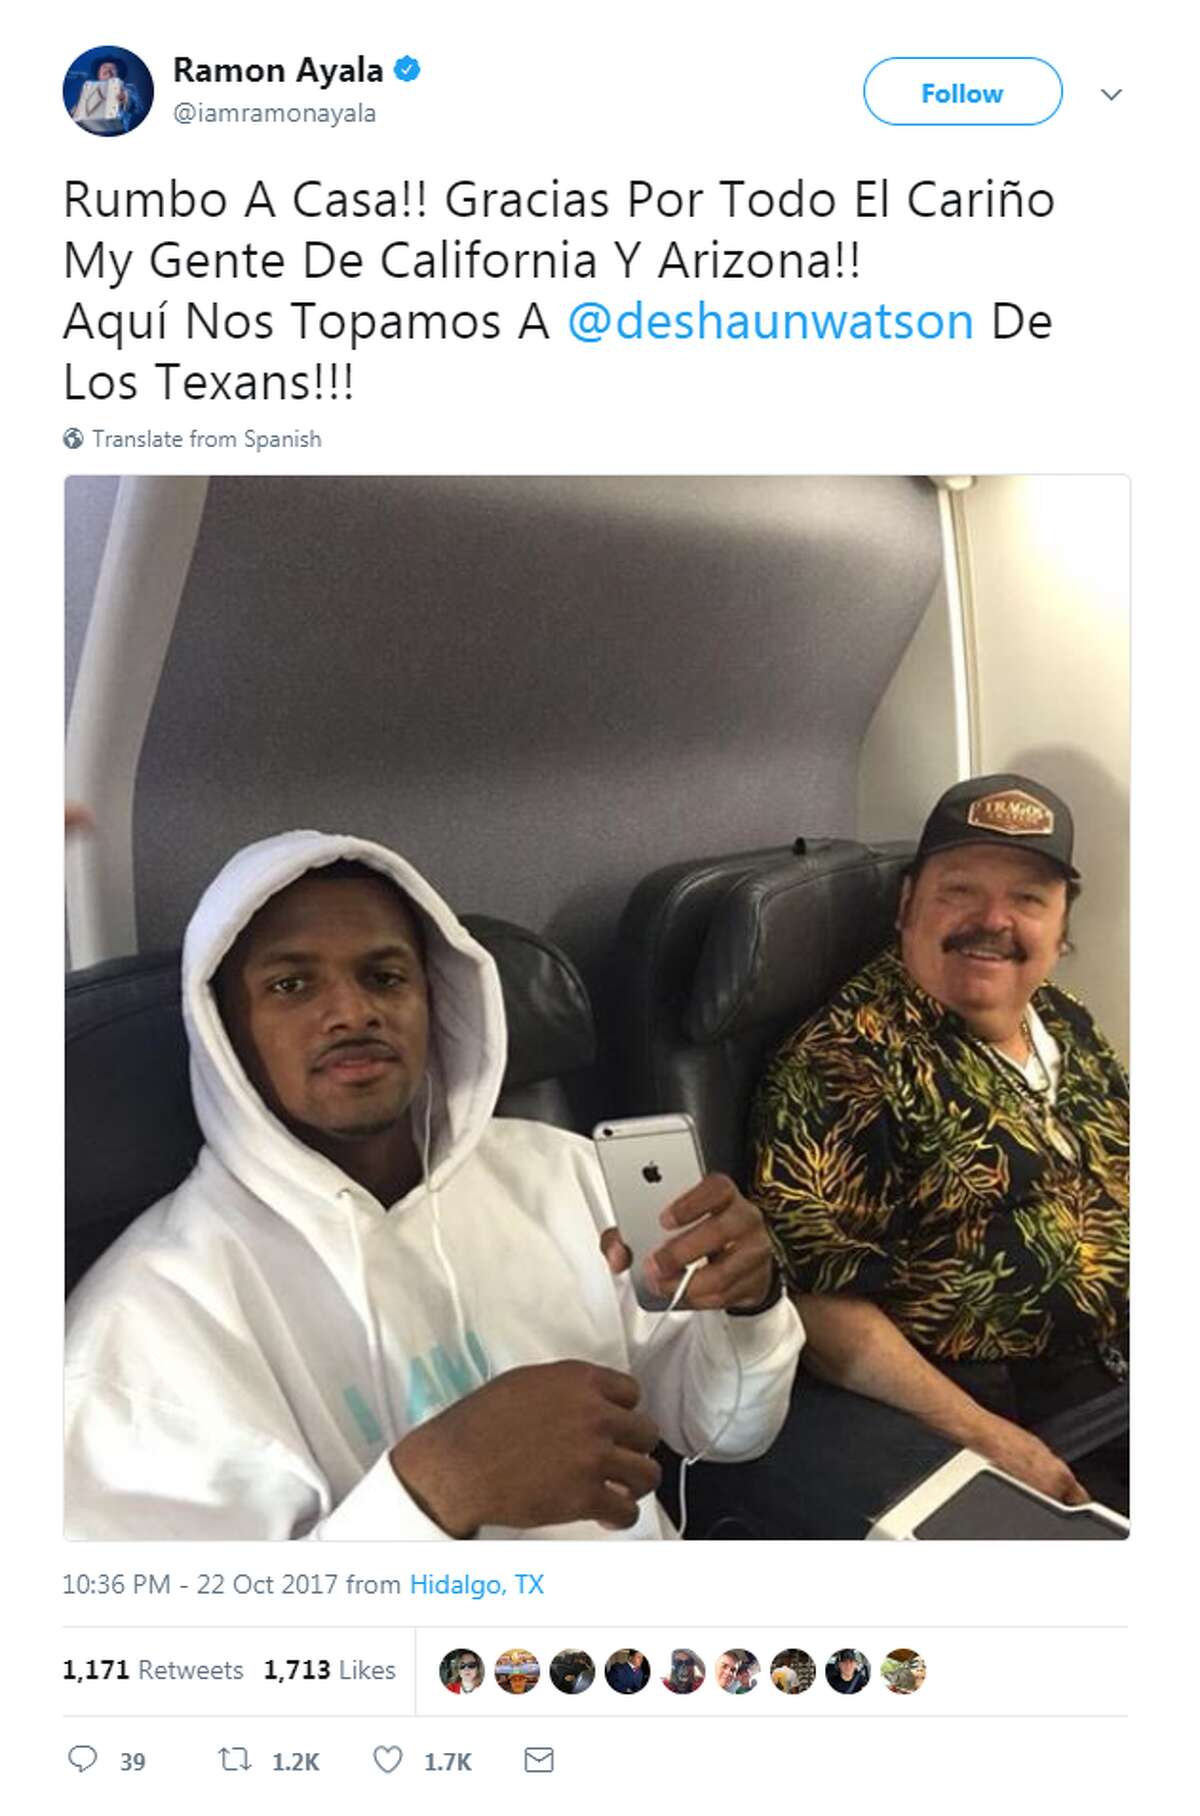 Ramon Ayala tweeted a photo of himself seated beside Deshaun Watson on a plane Sunday night, saying he was headed home from California and Arizona.